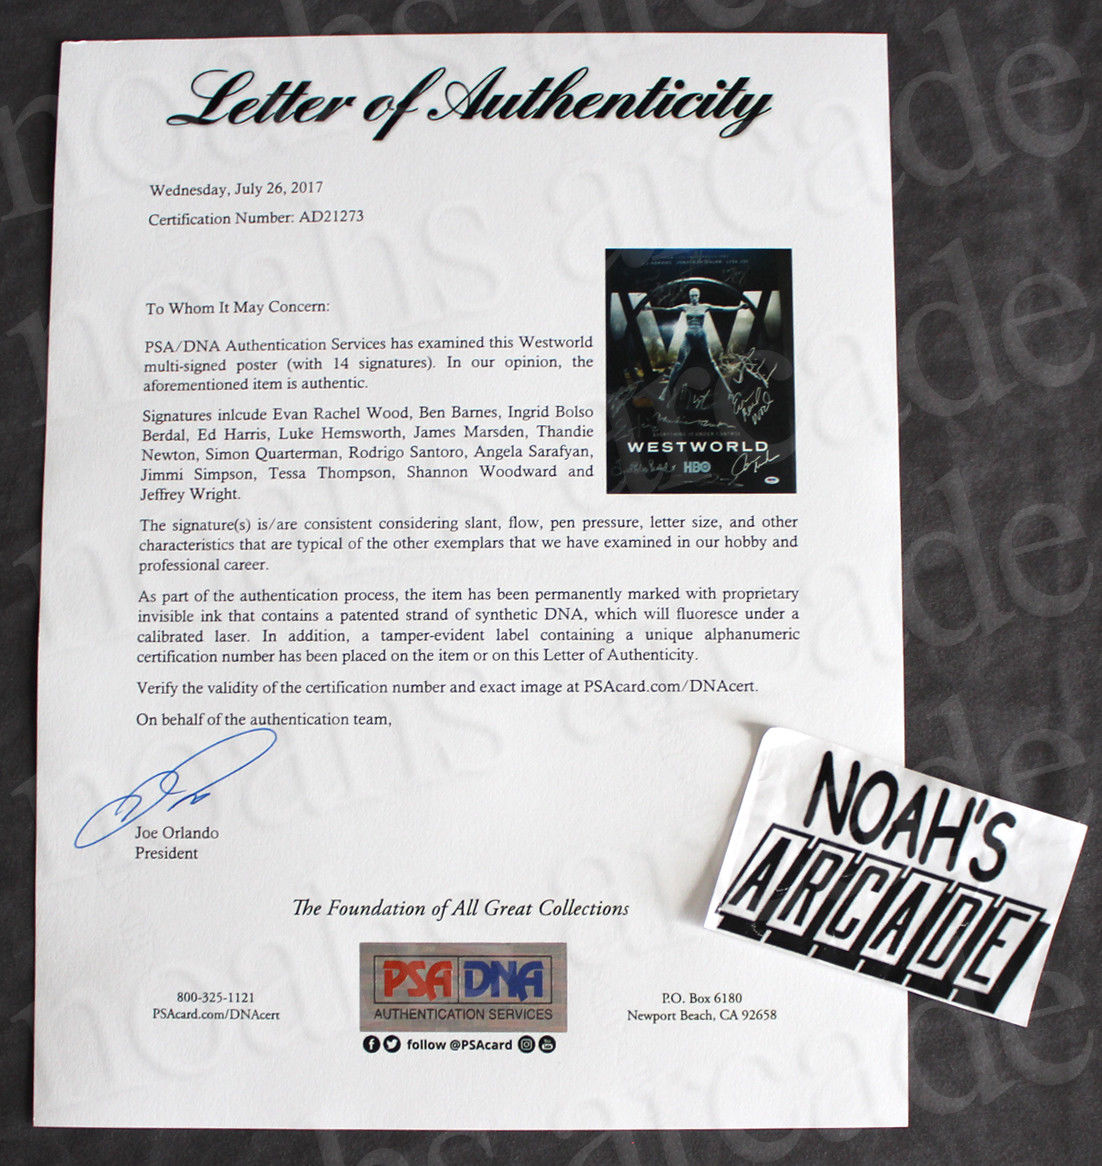 PSA/DNA Screws Up Authenticating a Westworld Cast Autographed Poster